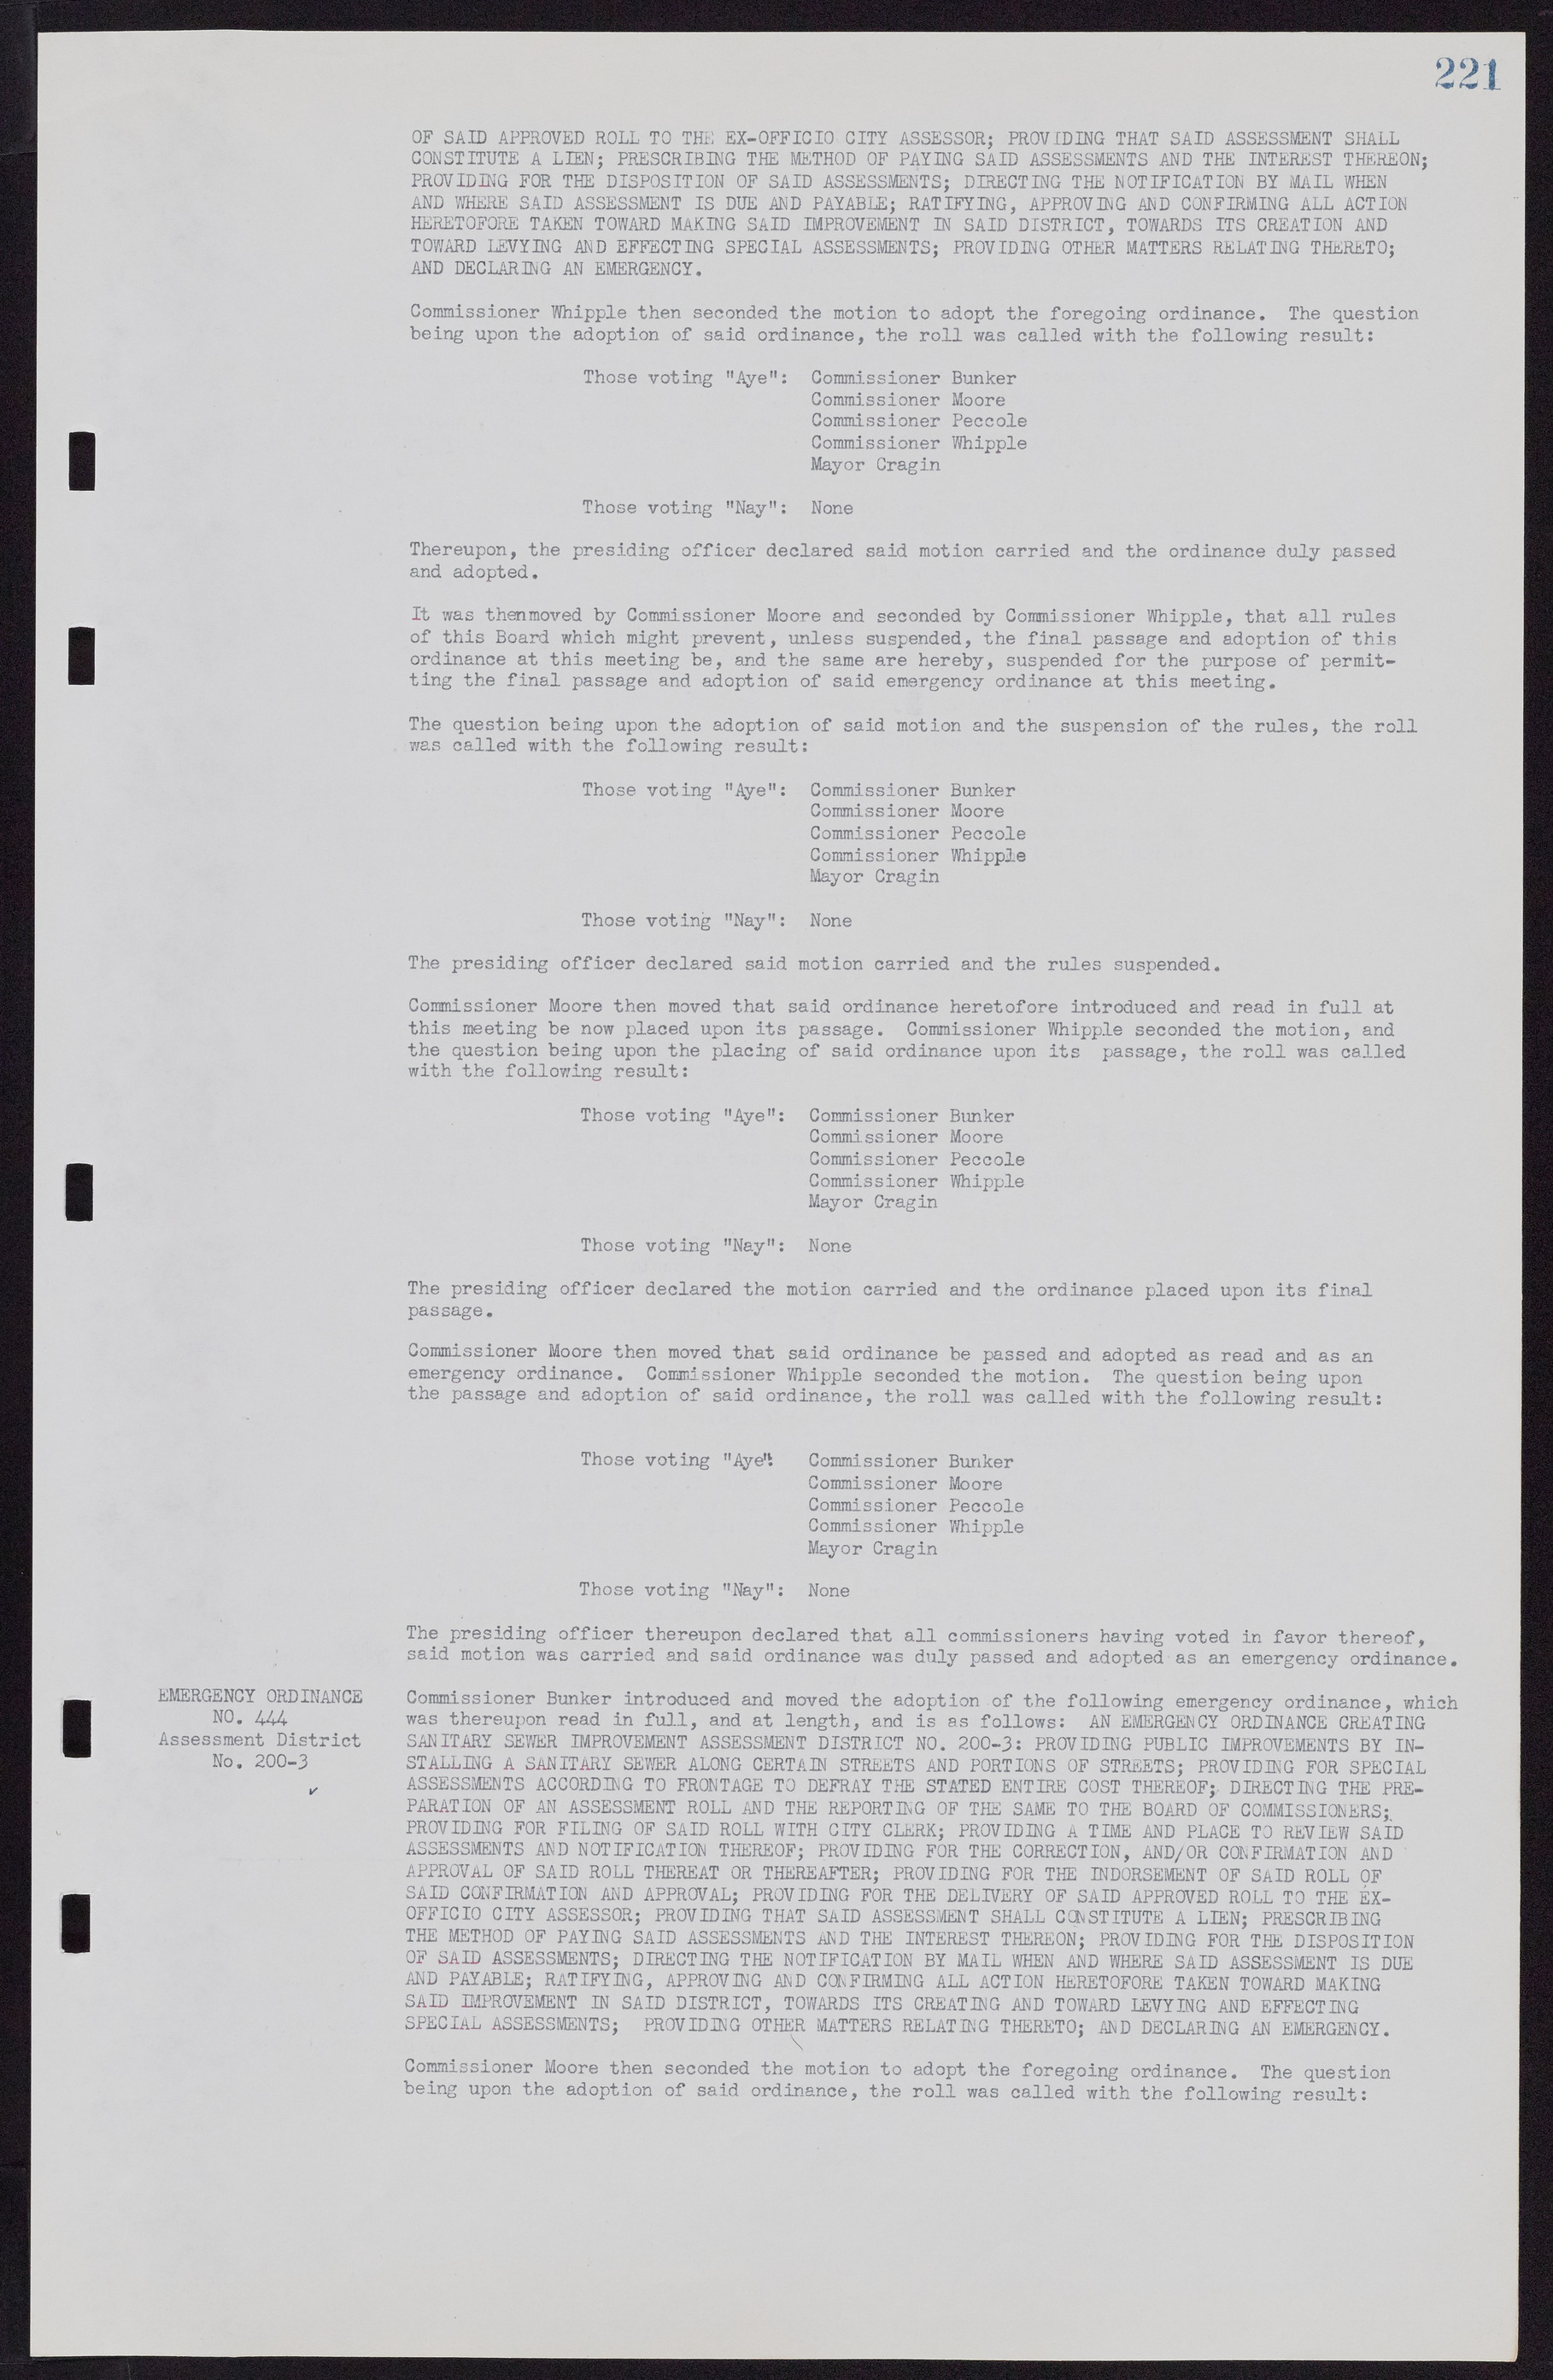 Las Vegas City Commission Minutes, November 7, 1949 to May 21, 1952, lvc000007-231